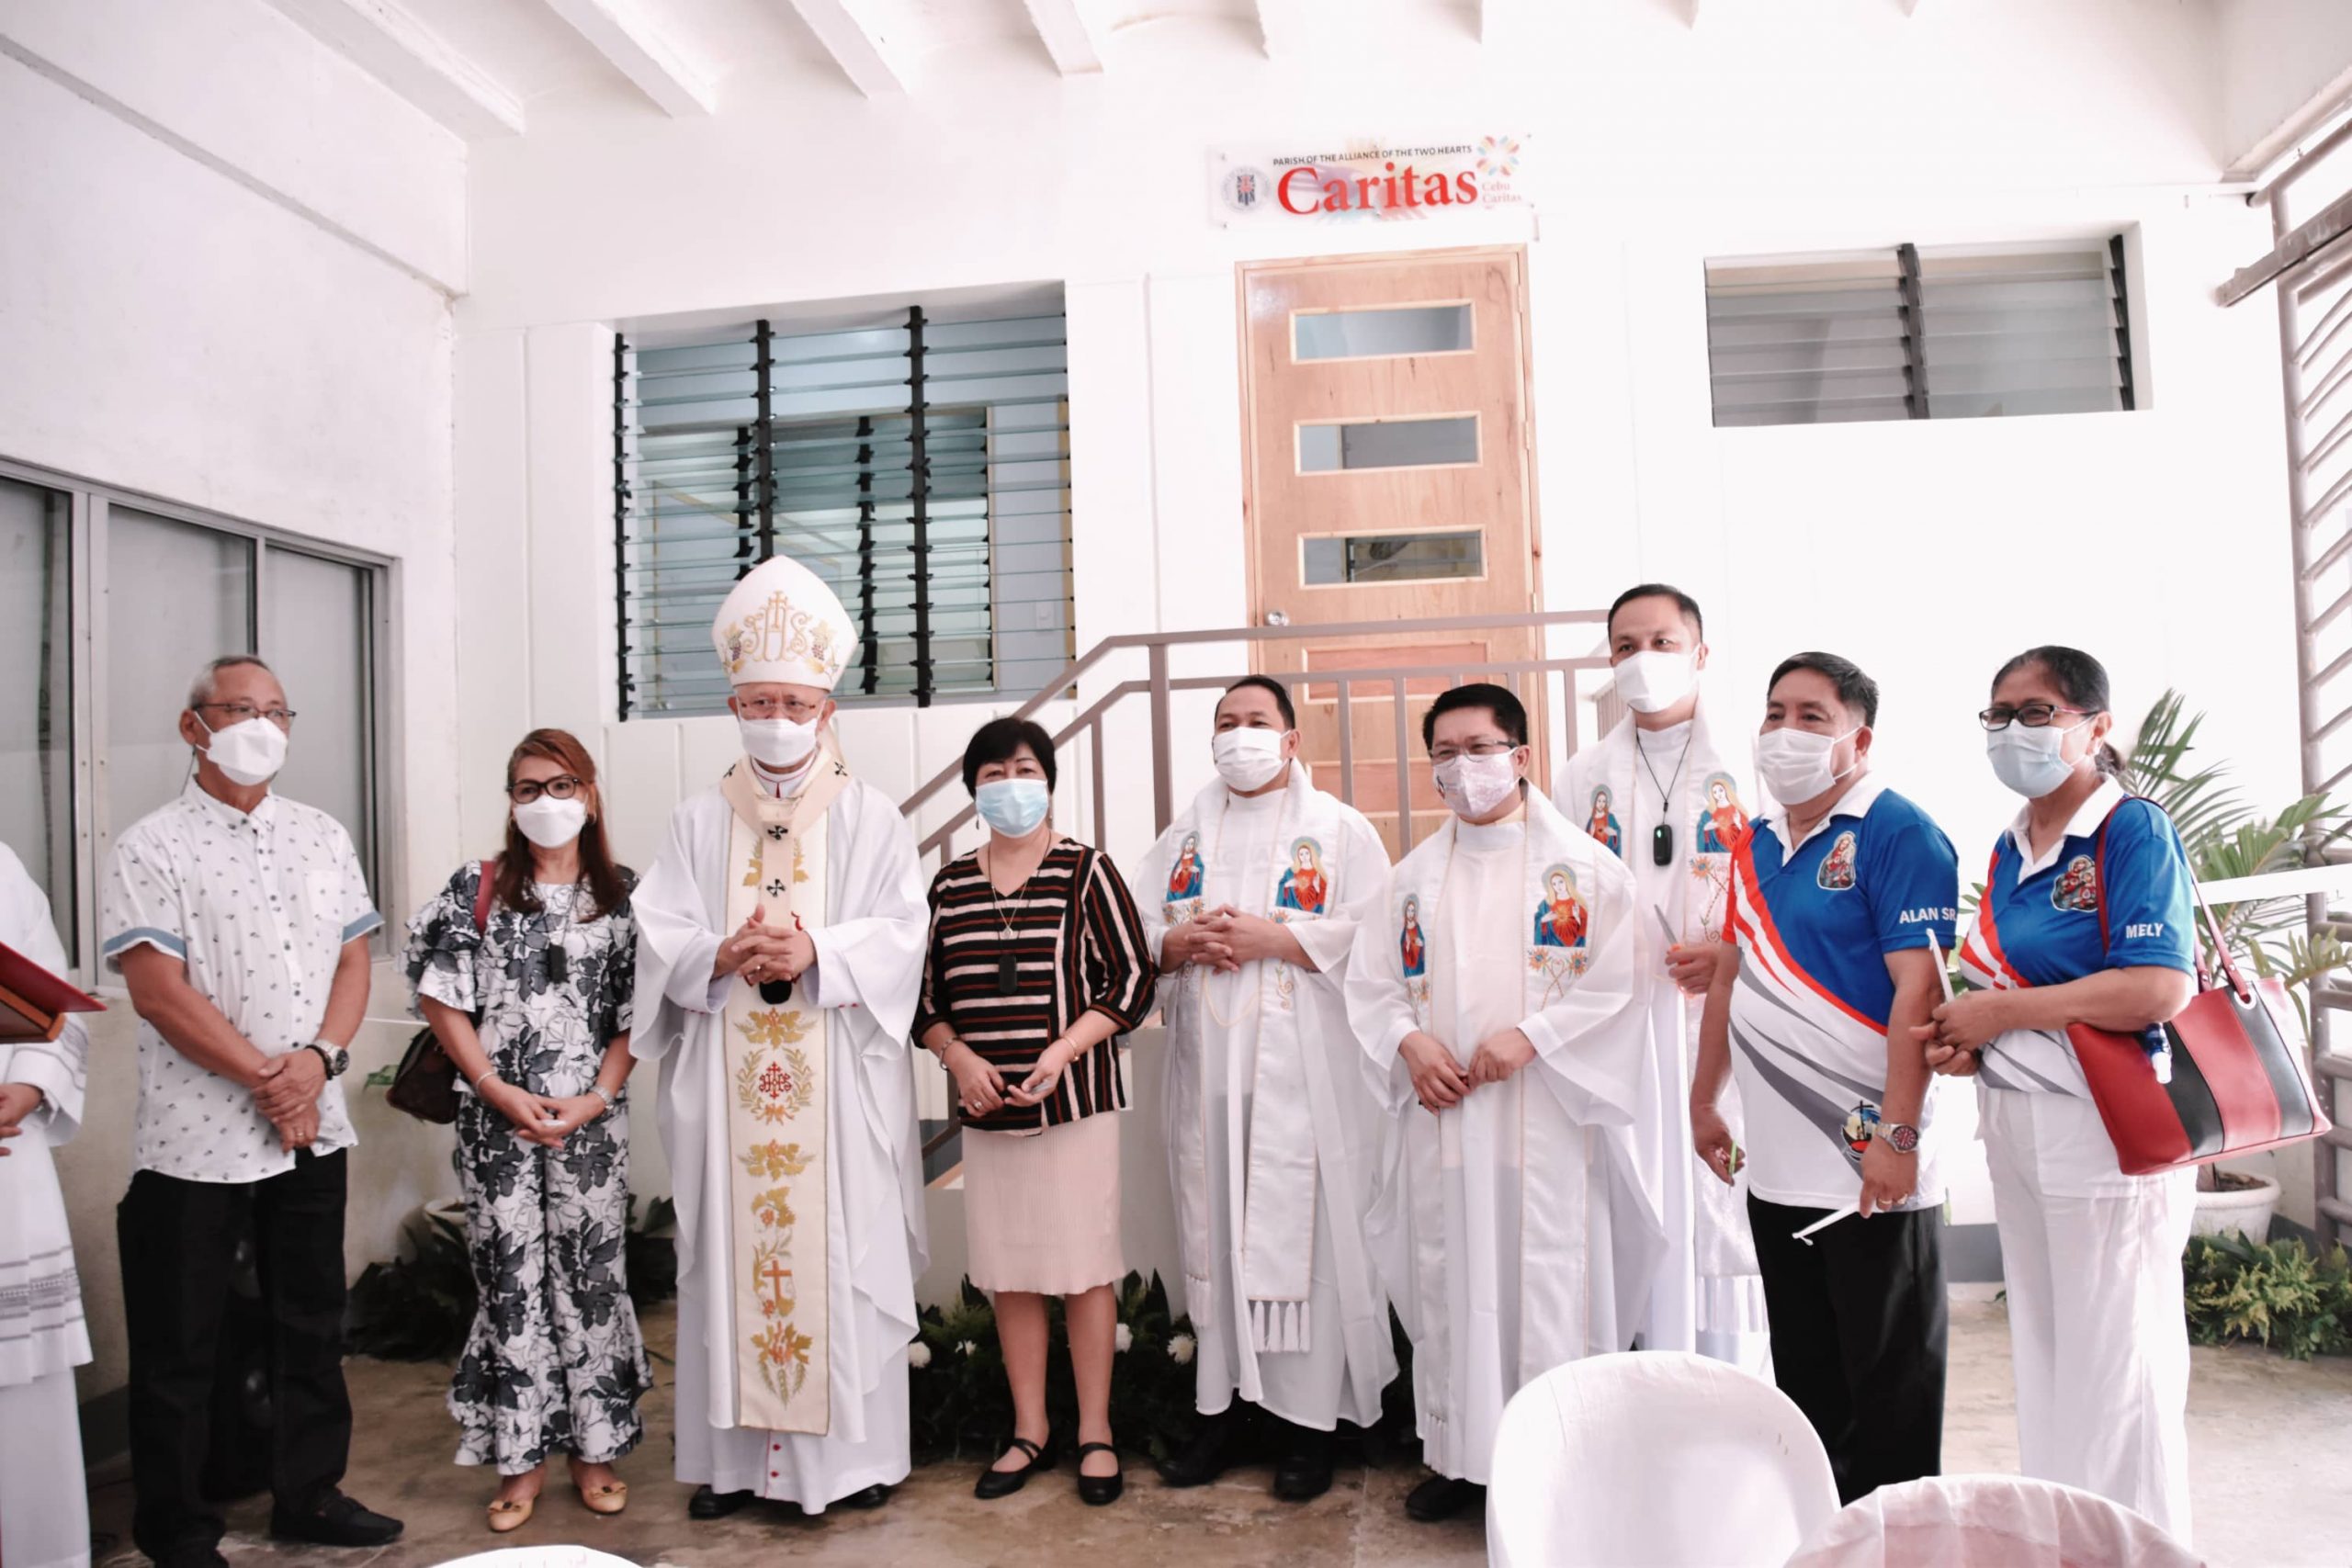 BANAWA. Archbishop Palma leads the blessing of the Parish Caritas center at The Alliance of Two Hearts Parish in Banawa, Cebu City. The parish was the first to launch its Parish Caritas center.